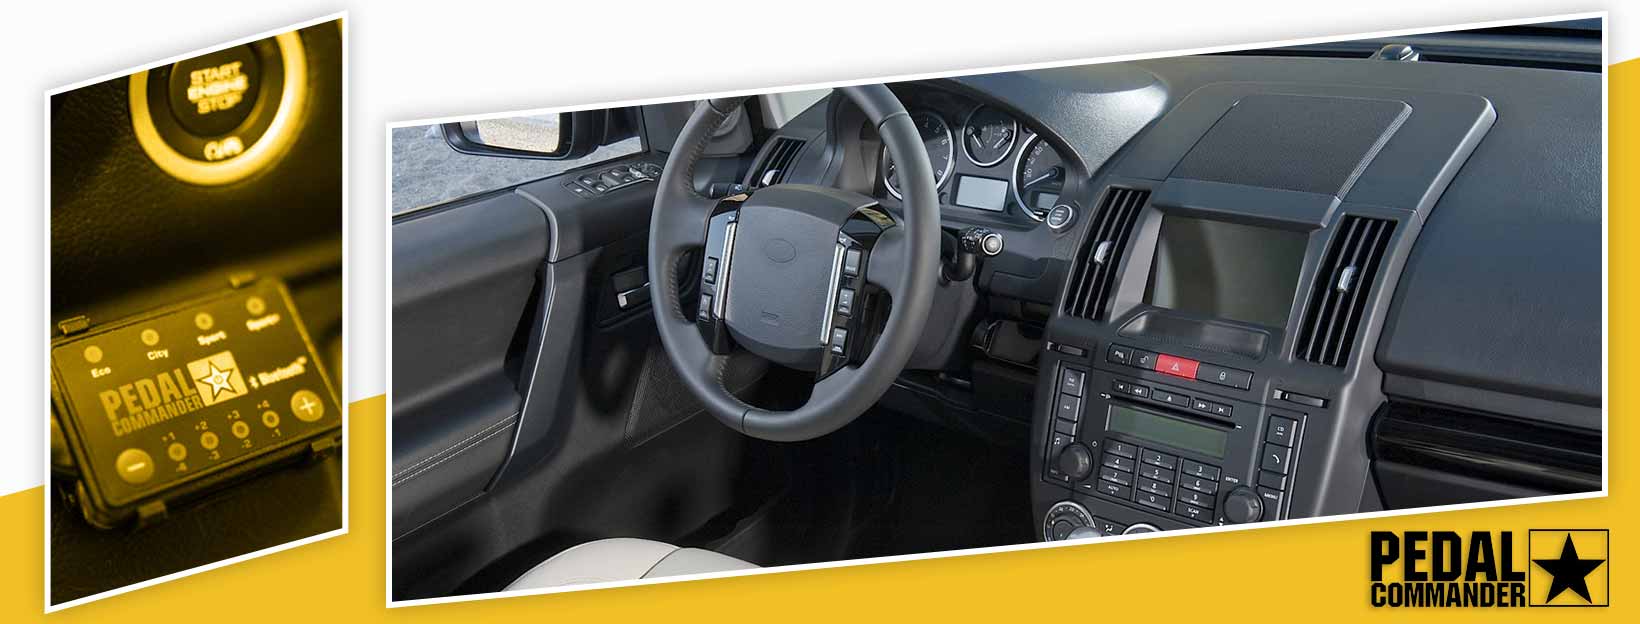 Pedal Commander for Land Rover Freelander - interior